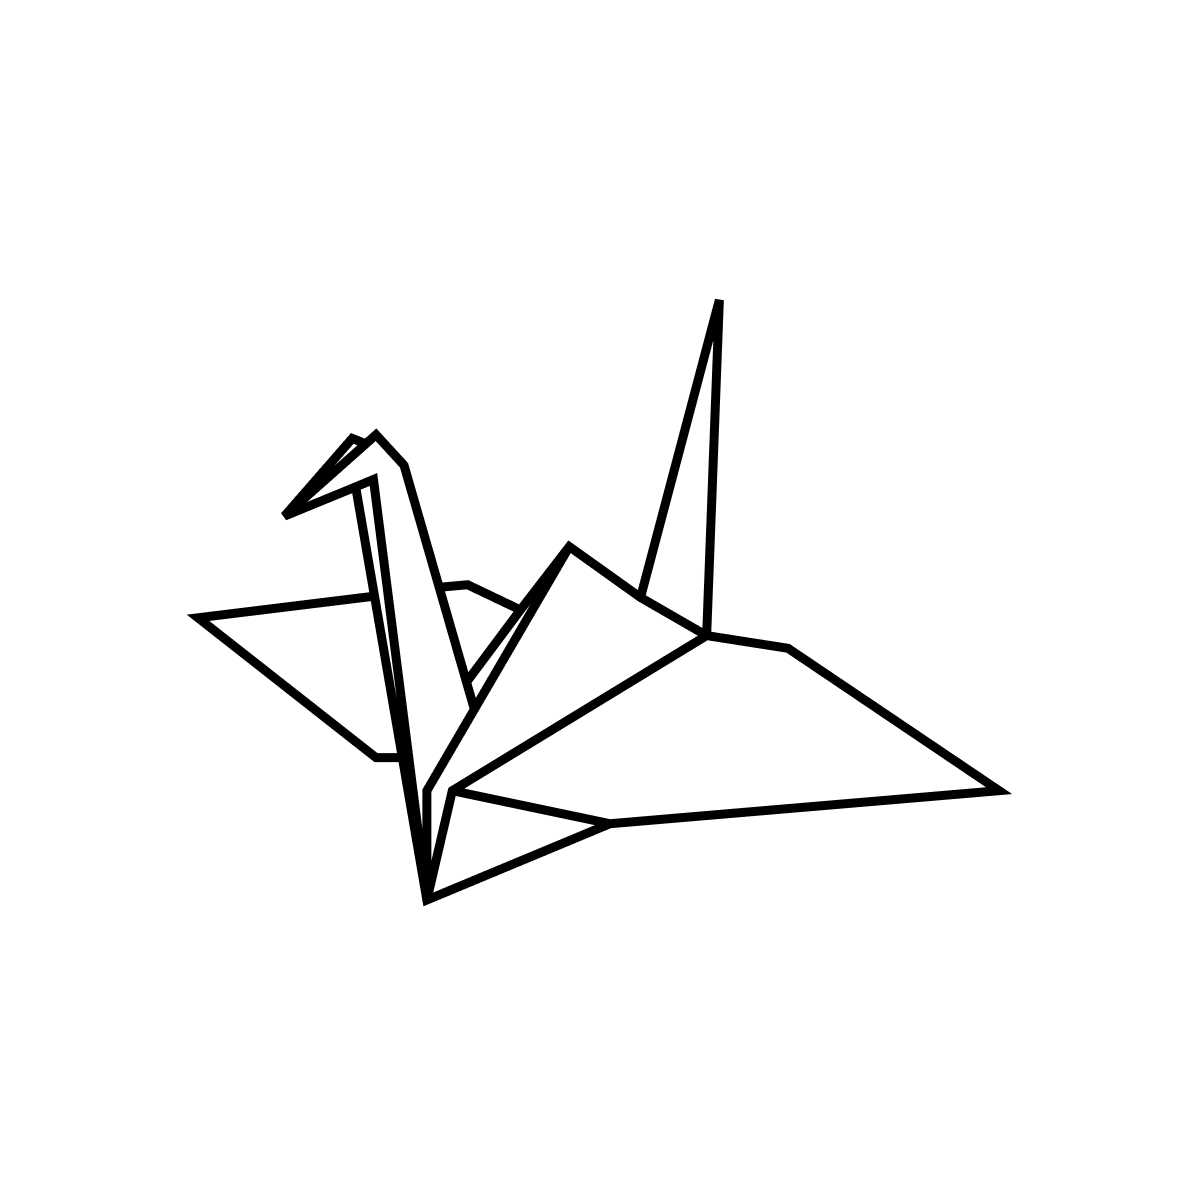 origami crane clip art